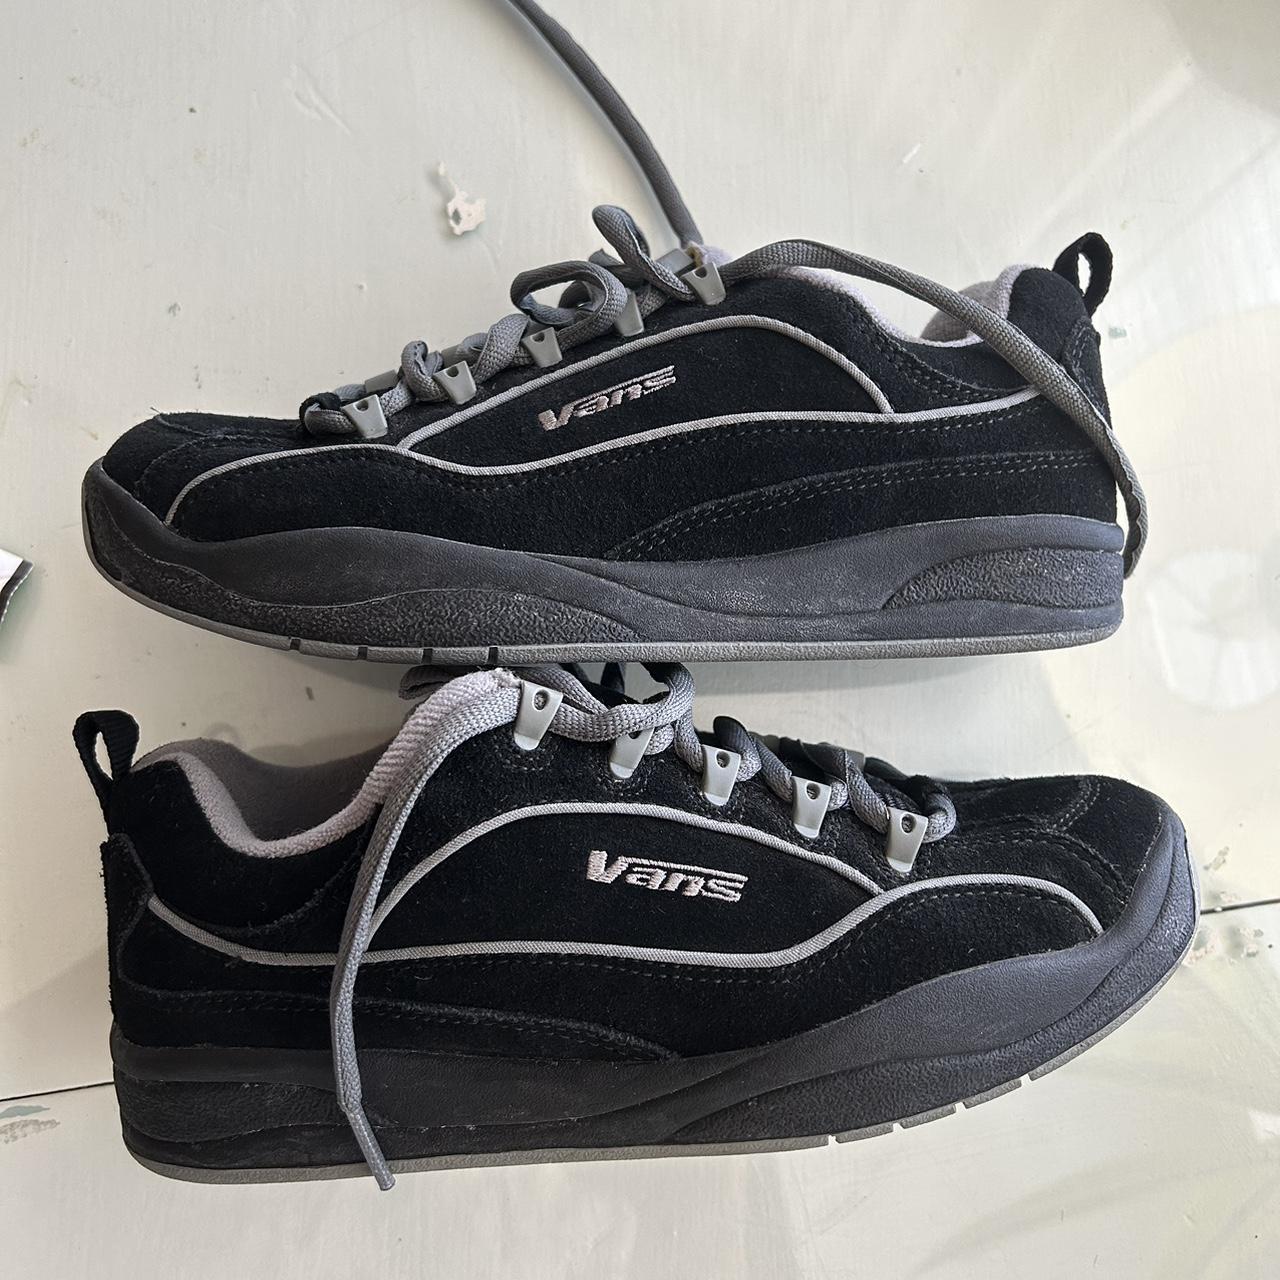 Vans Men's Sneakers - Black - US 7